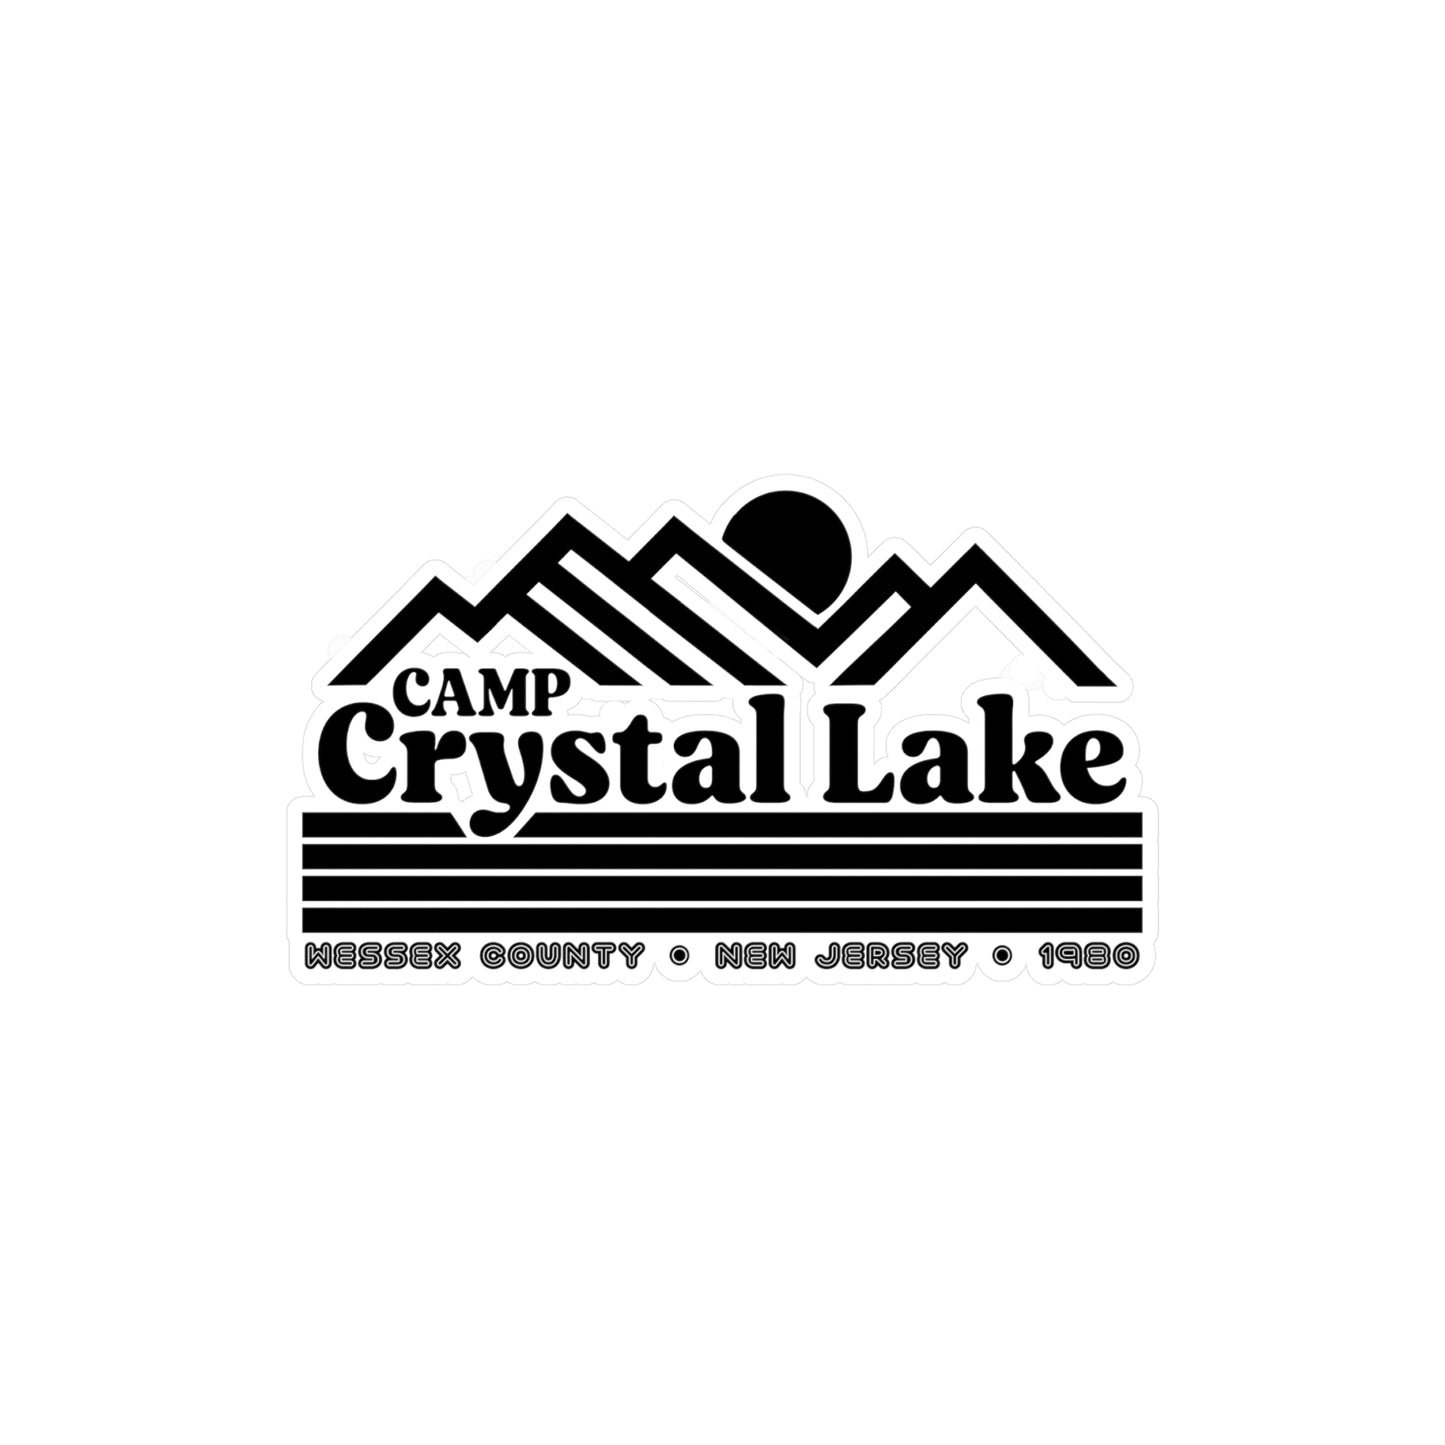 Camp Crystal Lake Vinyl Decal (Black)